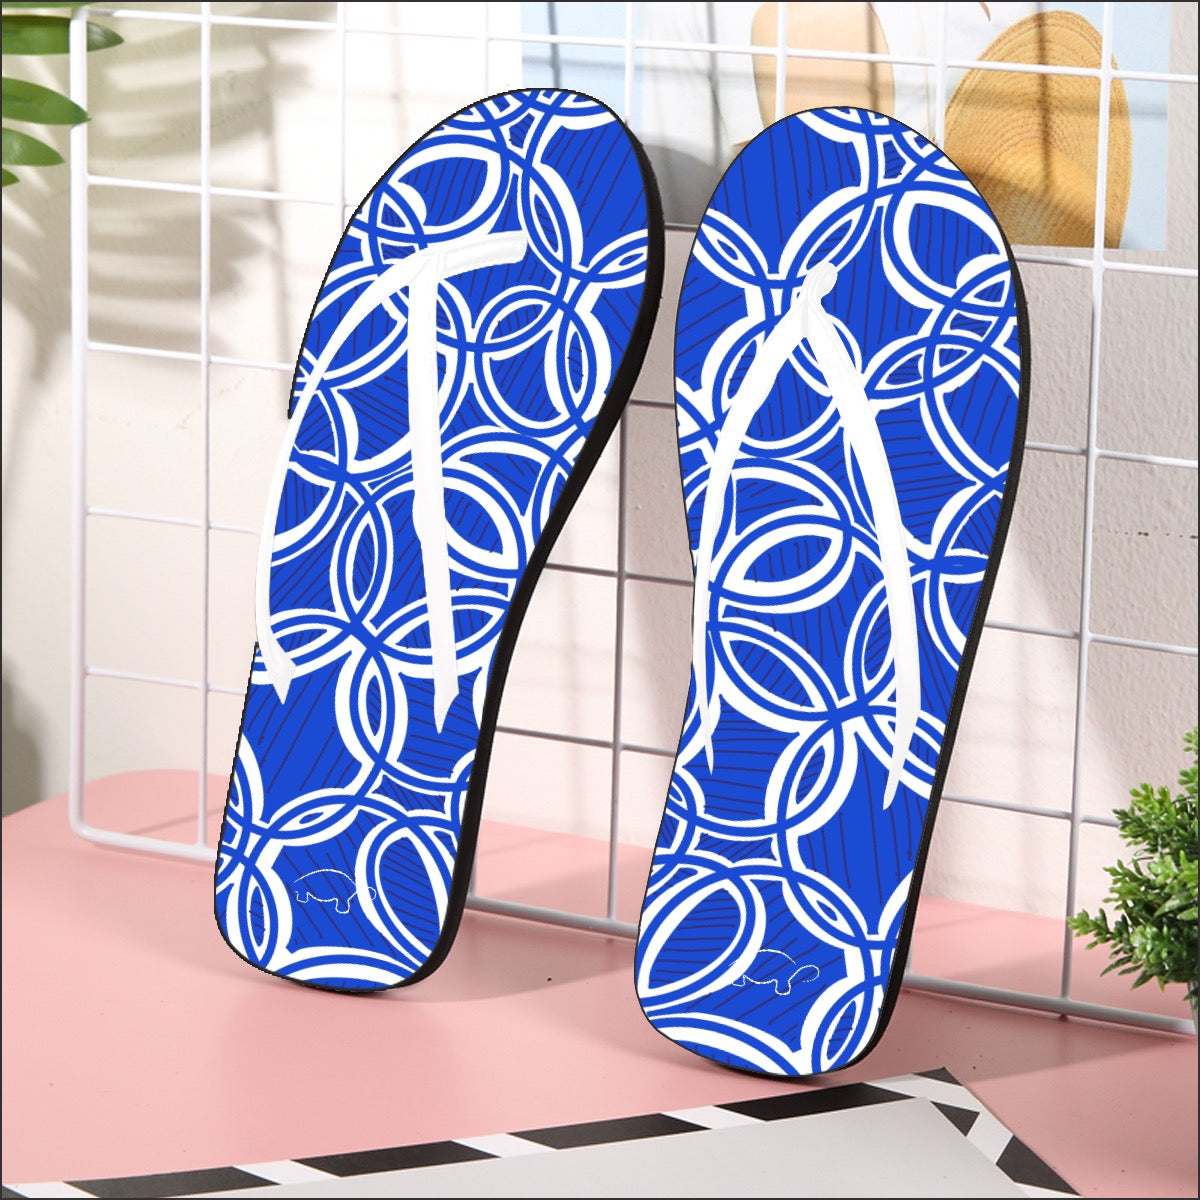 Geometric Blue/white Flip Flops. Footwear. Beach wear. Design hand-painted by the Designer Maria Alejandra Echenique